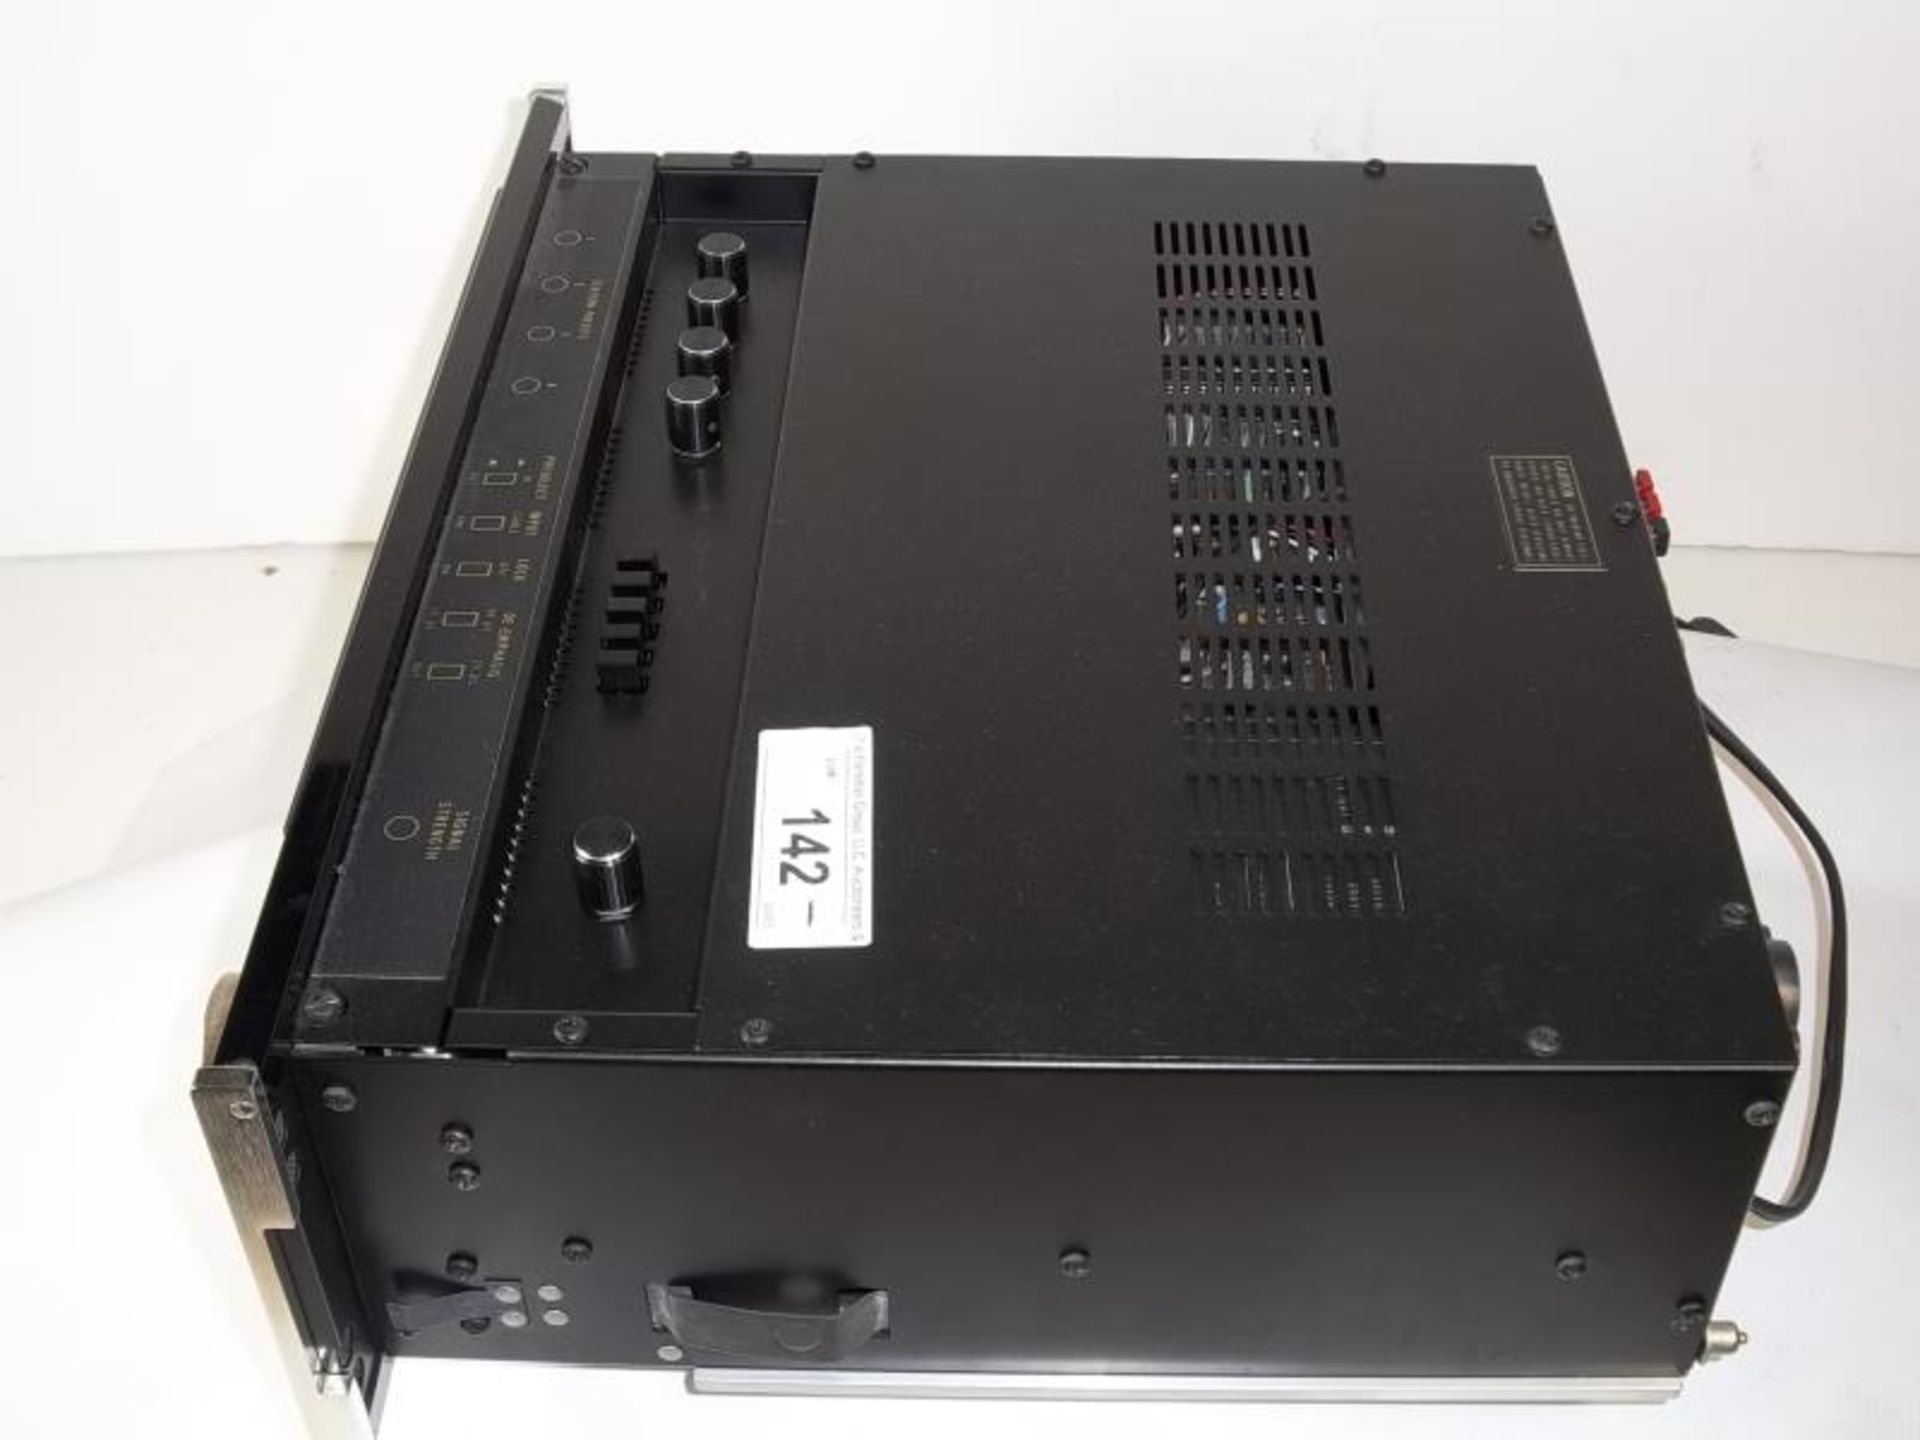 McIntosh MR 80, Digital FM Tuner, no case, s # CK2247, tested - does not power up - Image 4 of 7